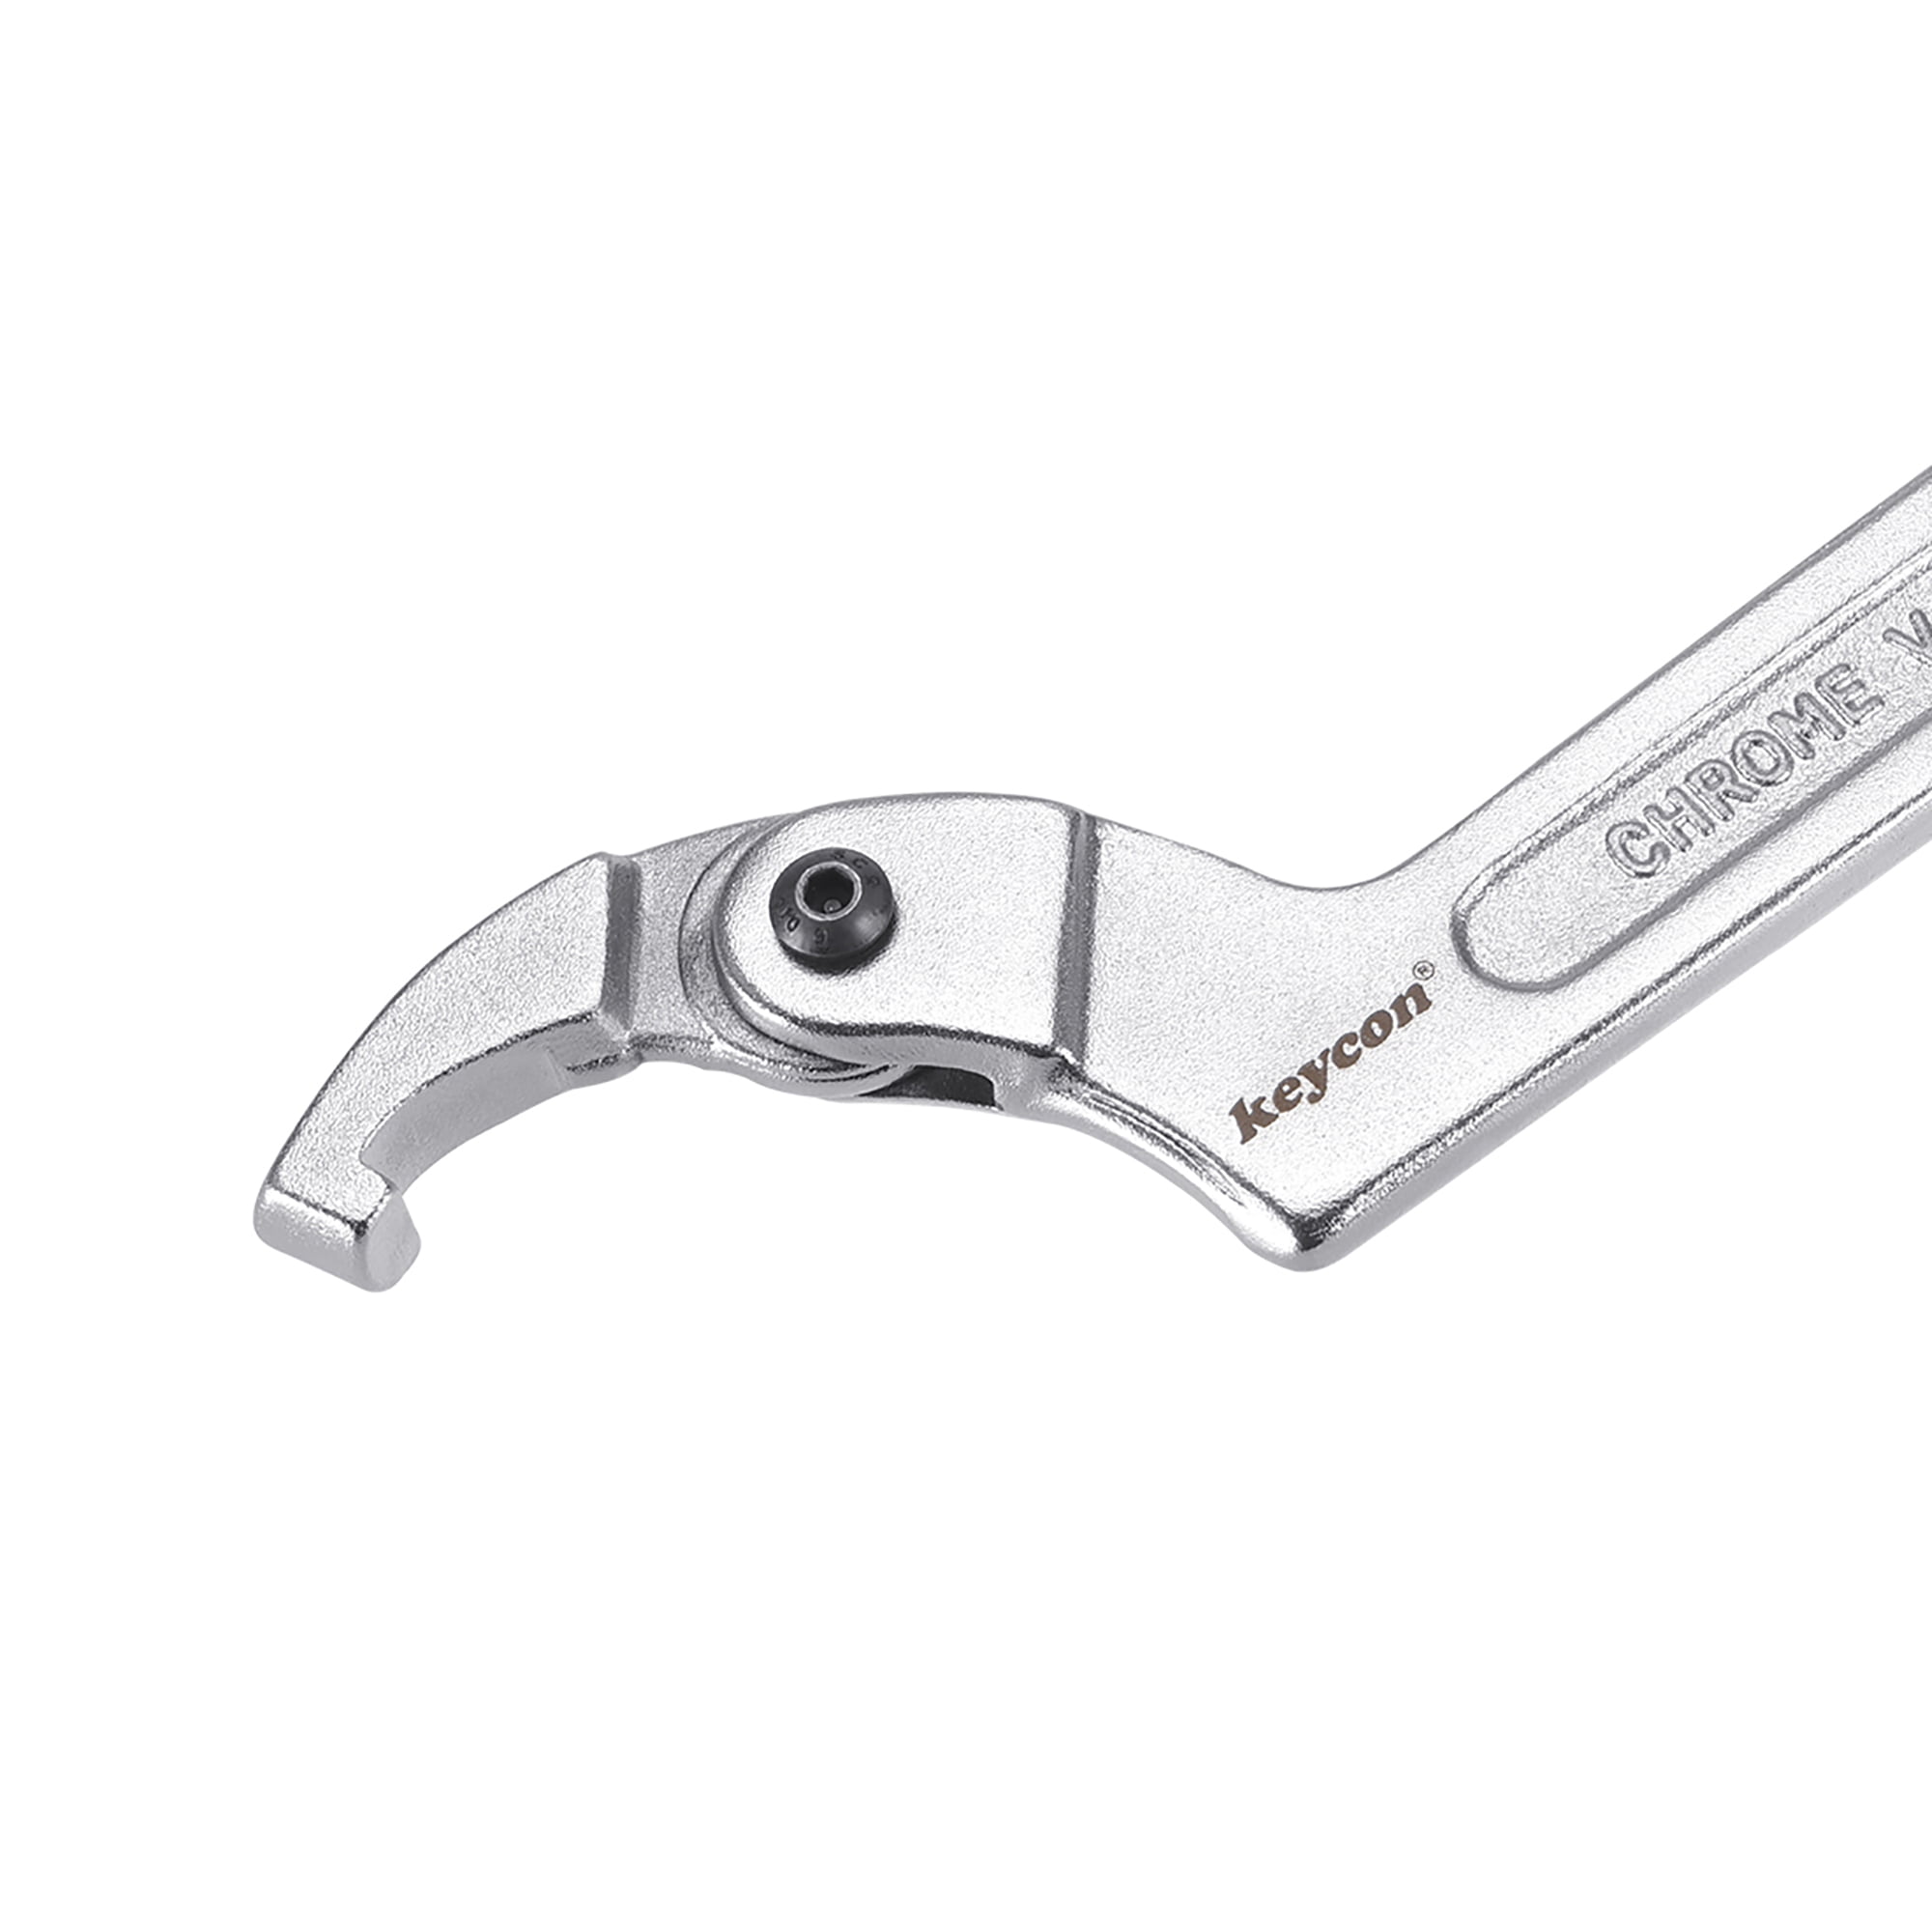 Chrome Vanadium Adjustable Hook Wrench 32-76mm 1 1/4-3 Inch Utoolmart C Spanner Tool Square Nose 1pcs 